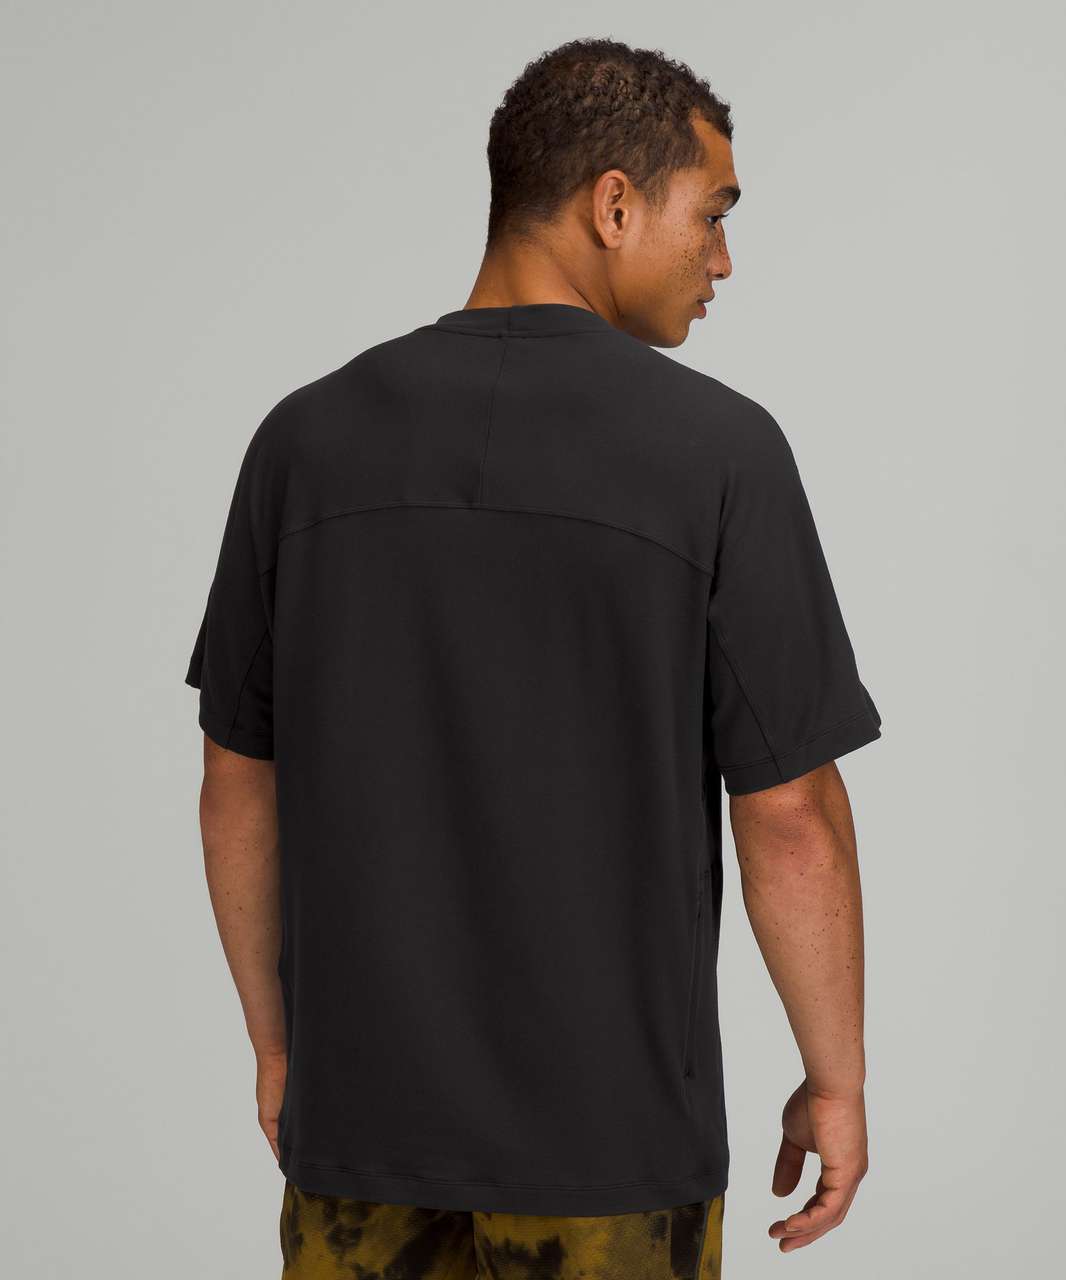 Lululemon Rulu Mock Neck Short Sleeve Shirt - Black